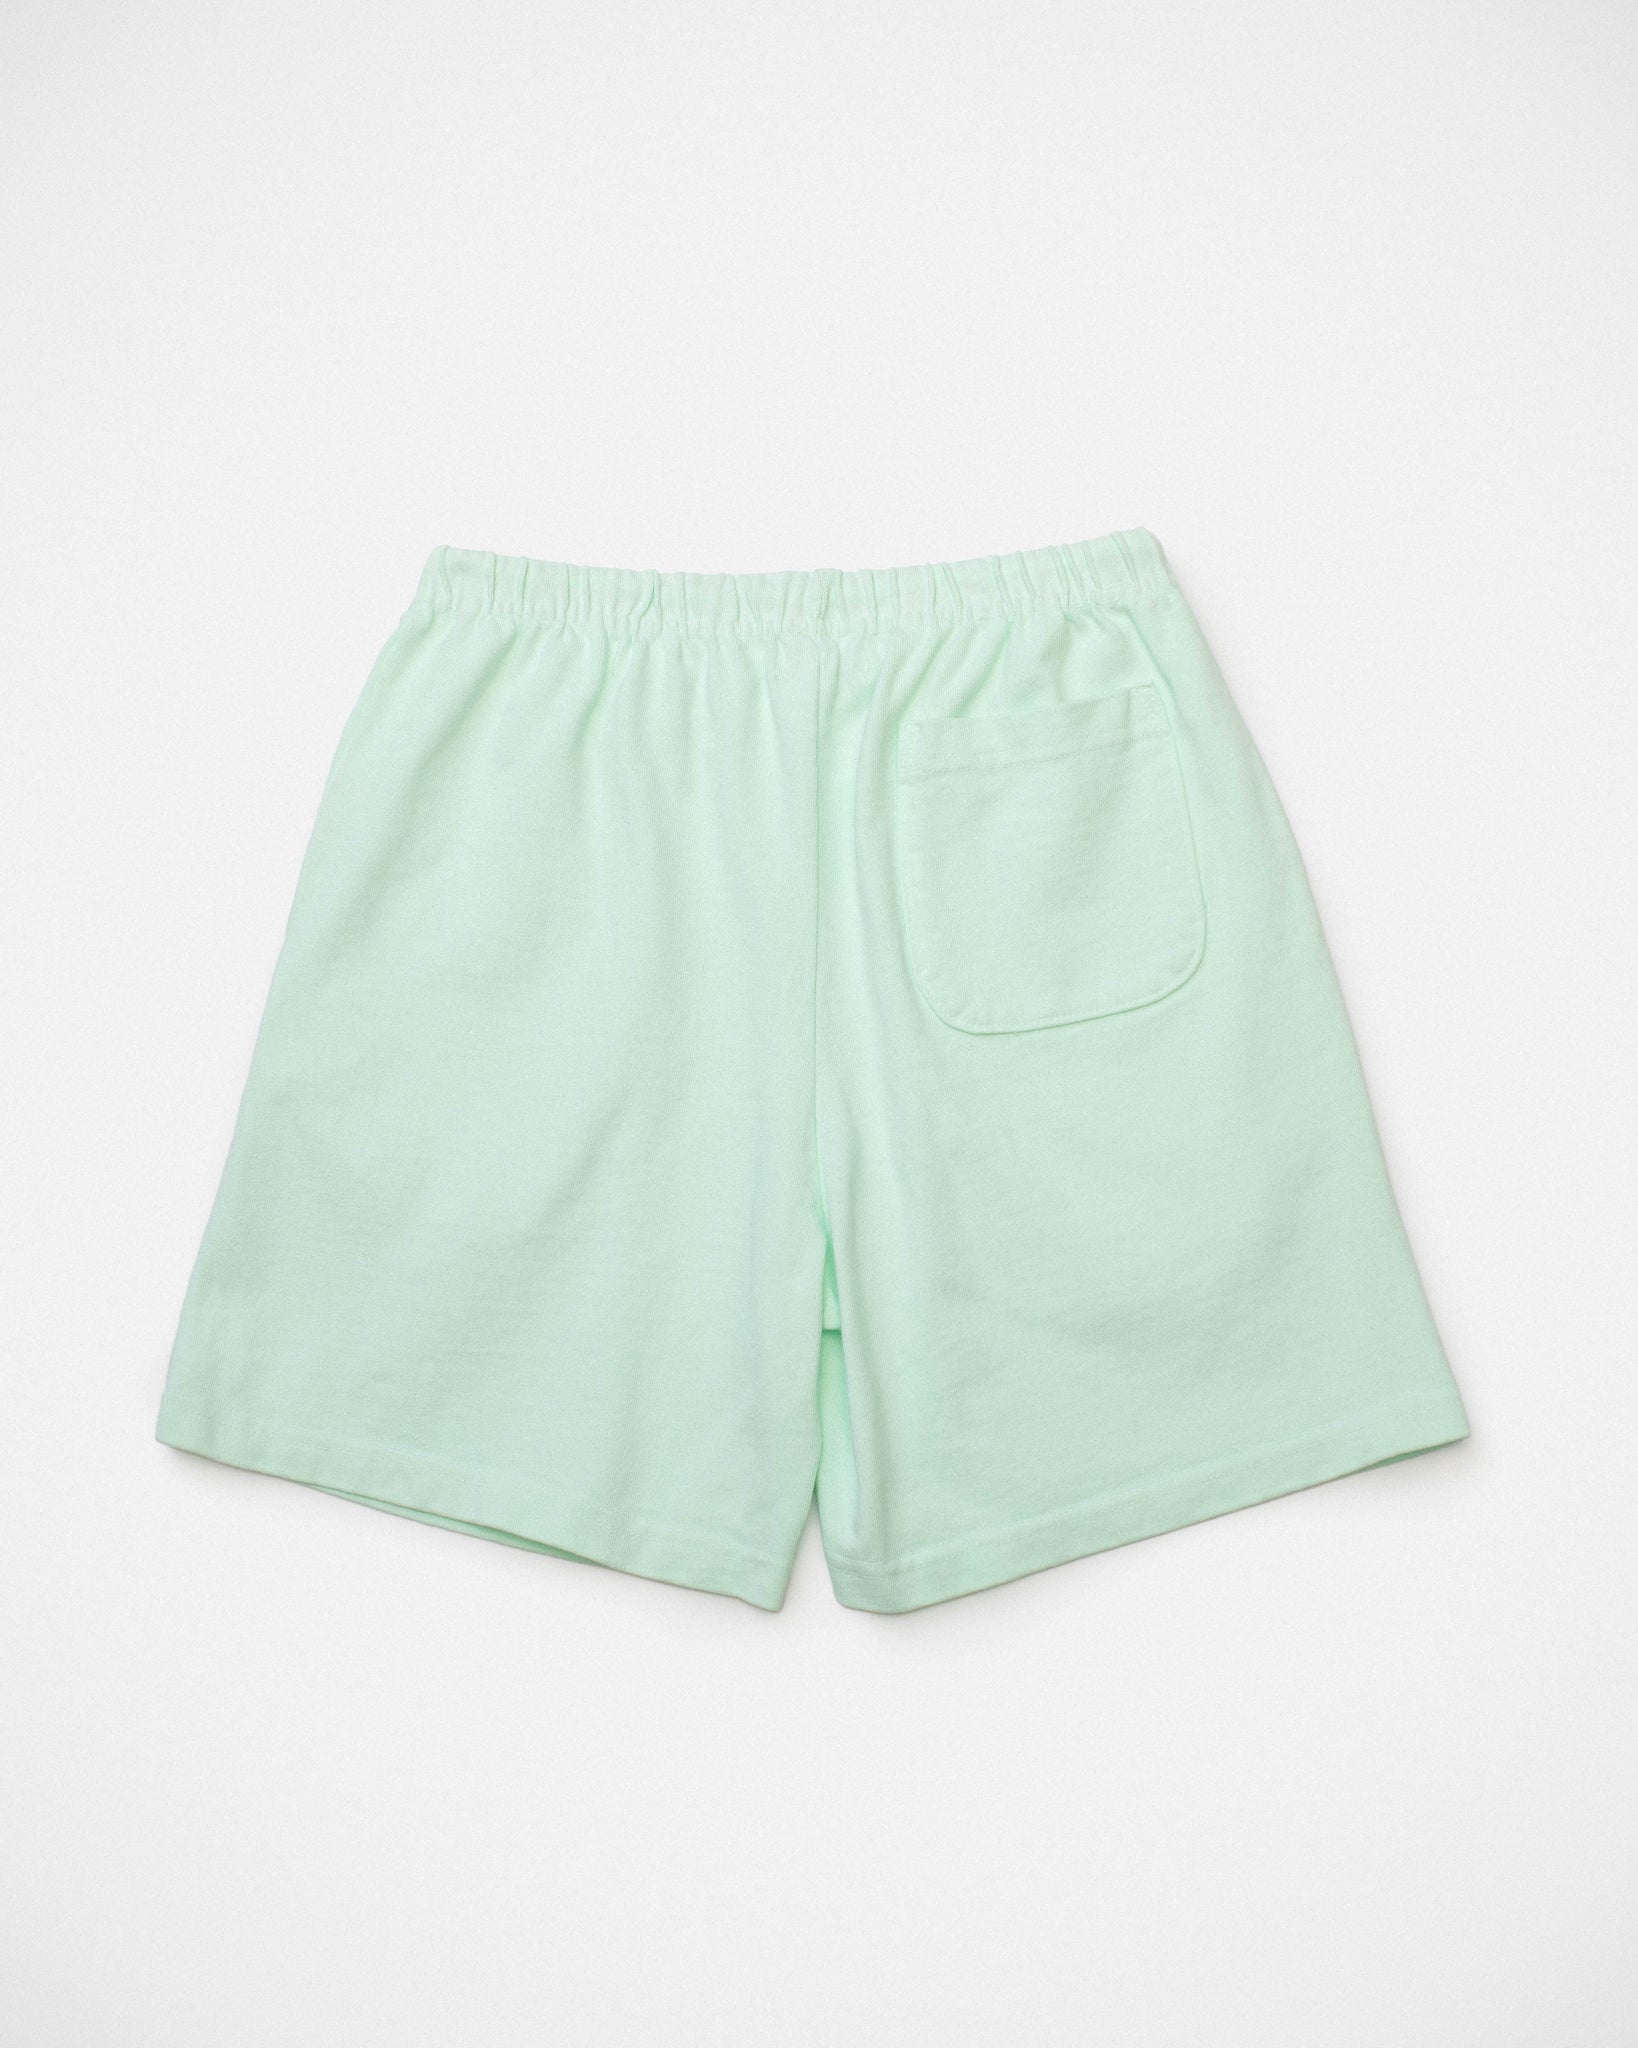 Goom Studio Shorts - Light Mint